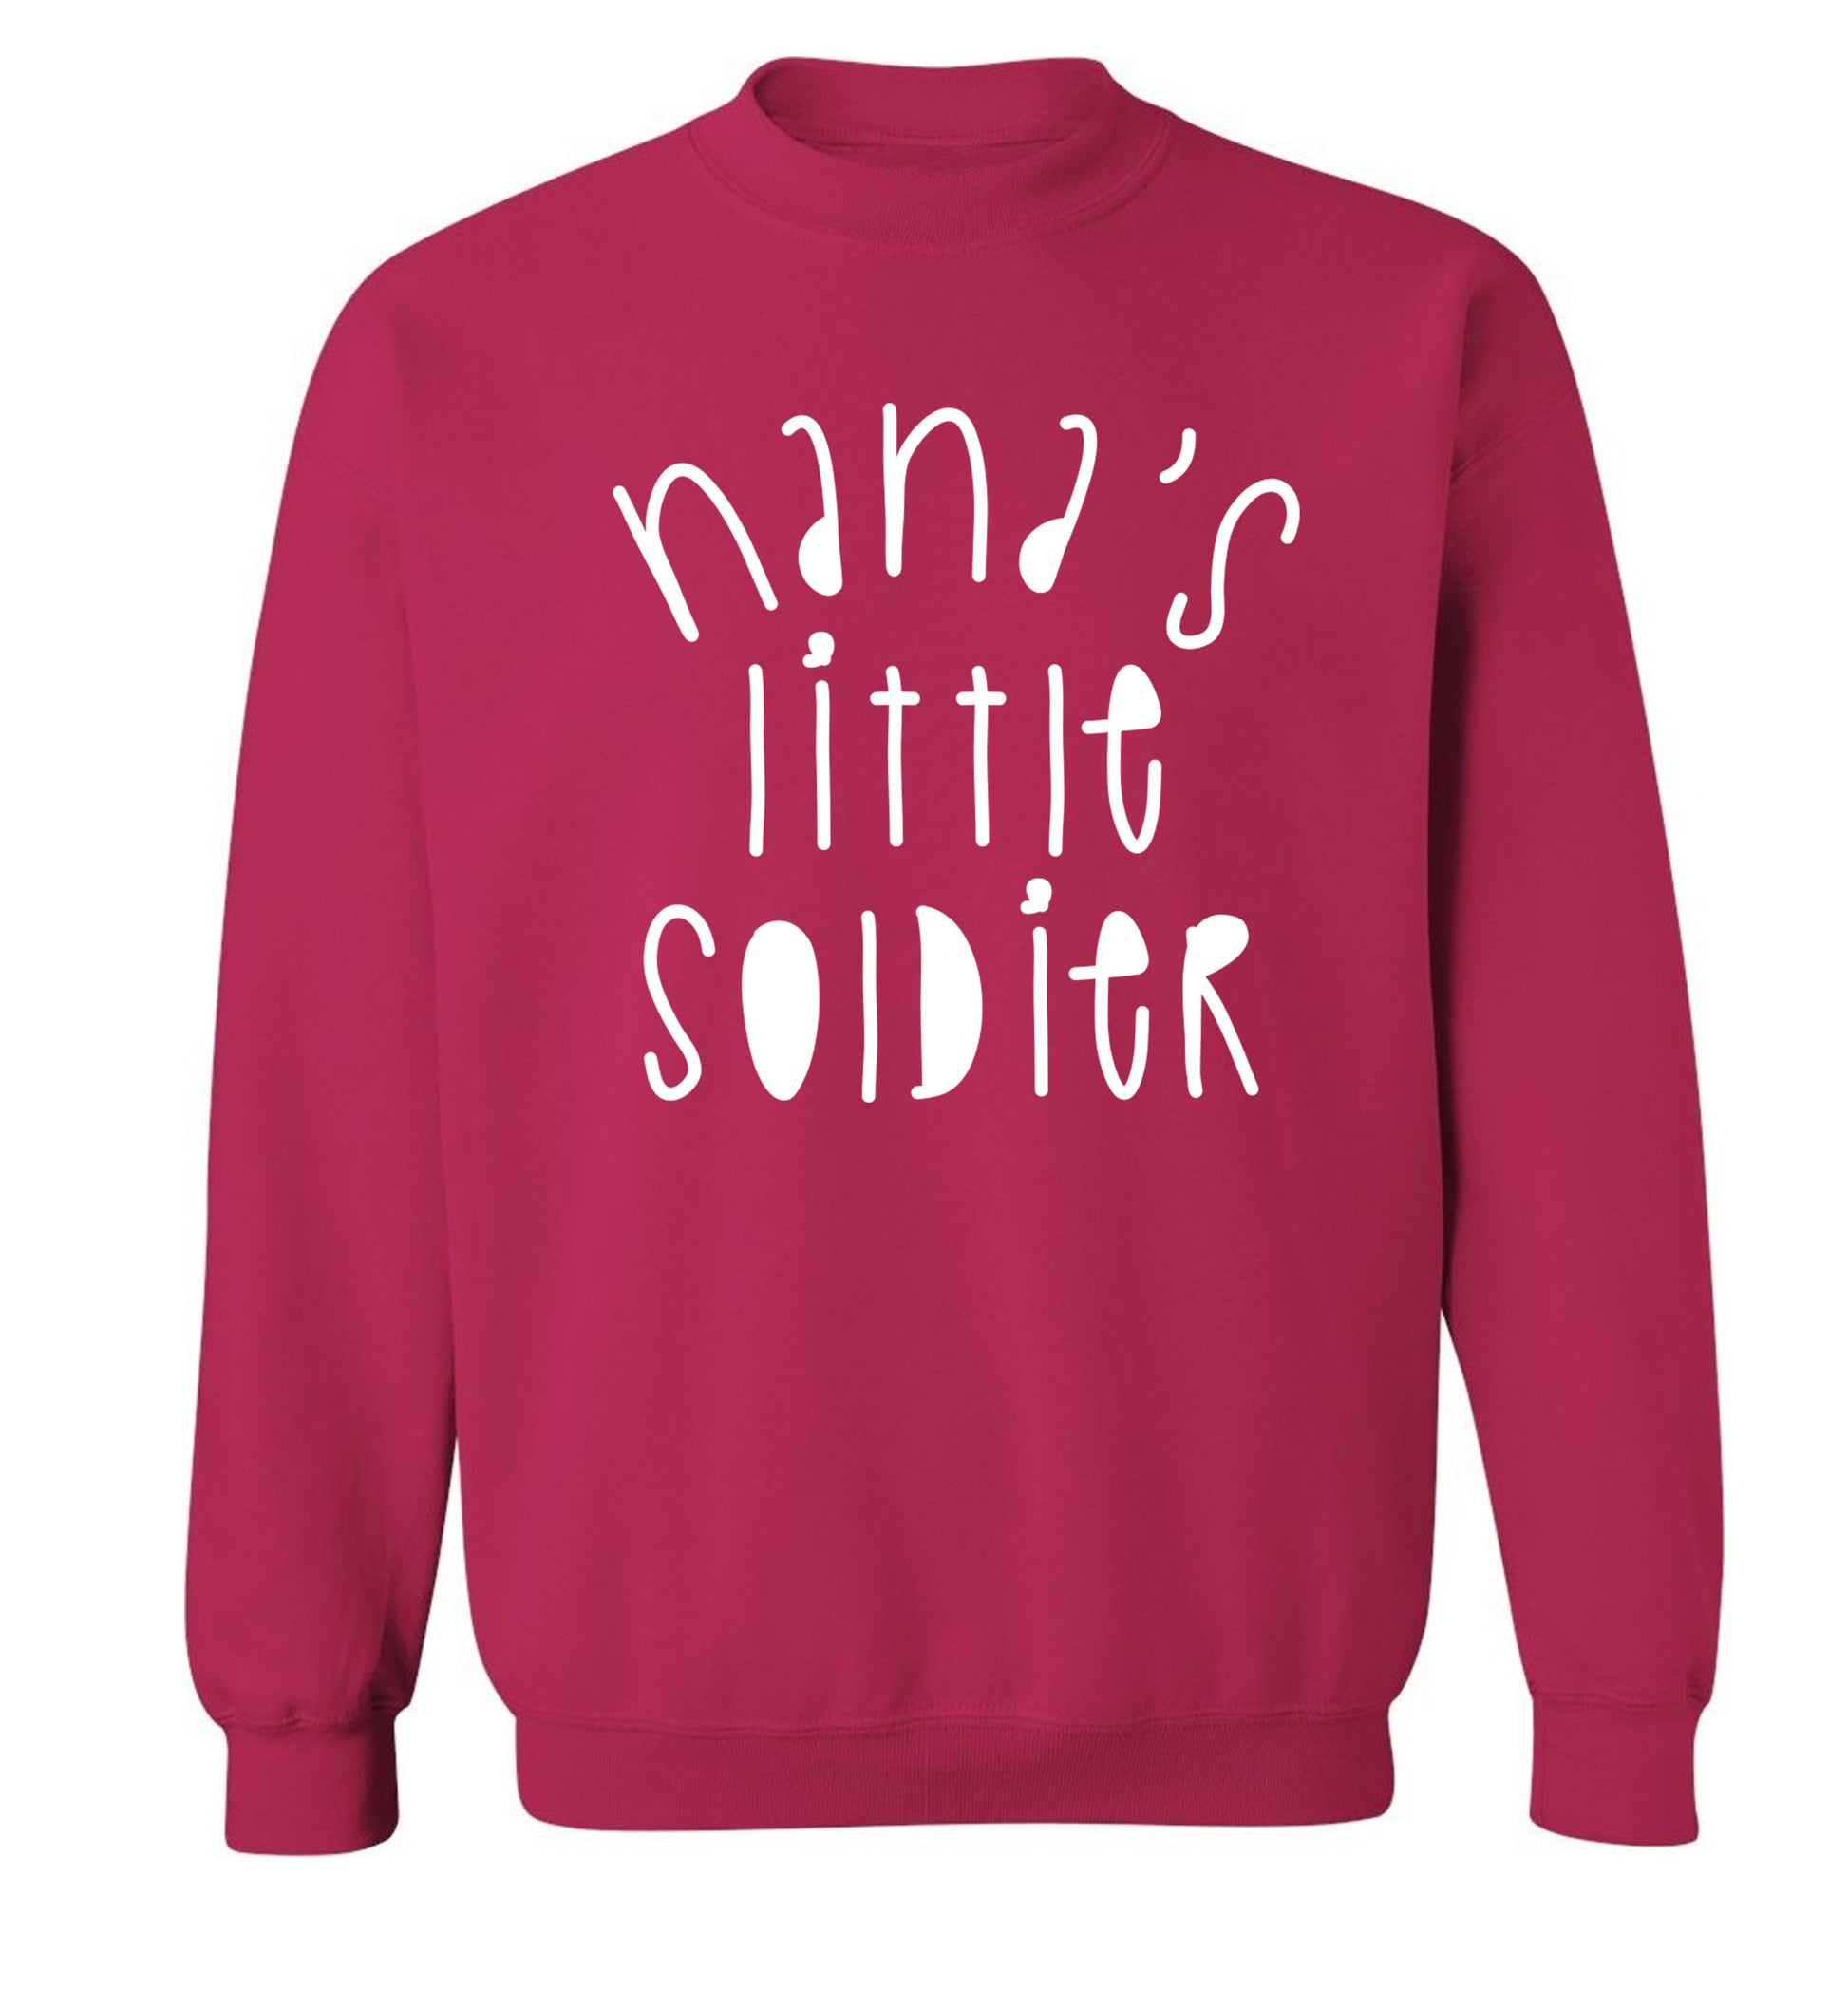 Nana's little soldier Adult's unisex pink Sweater 2XL